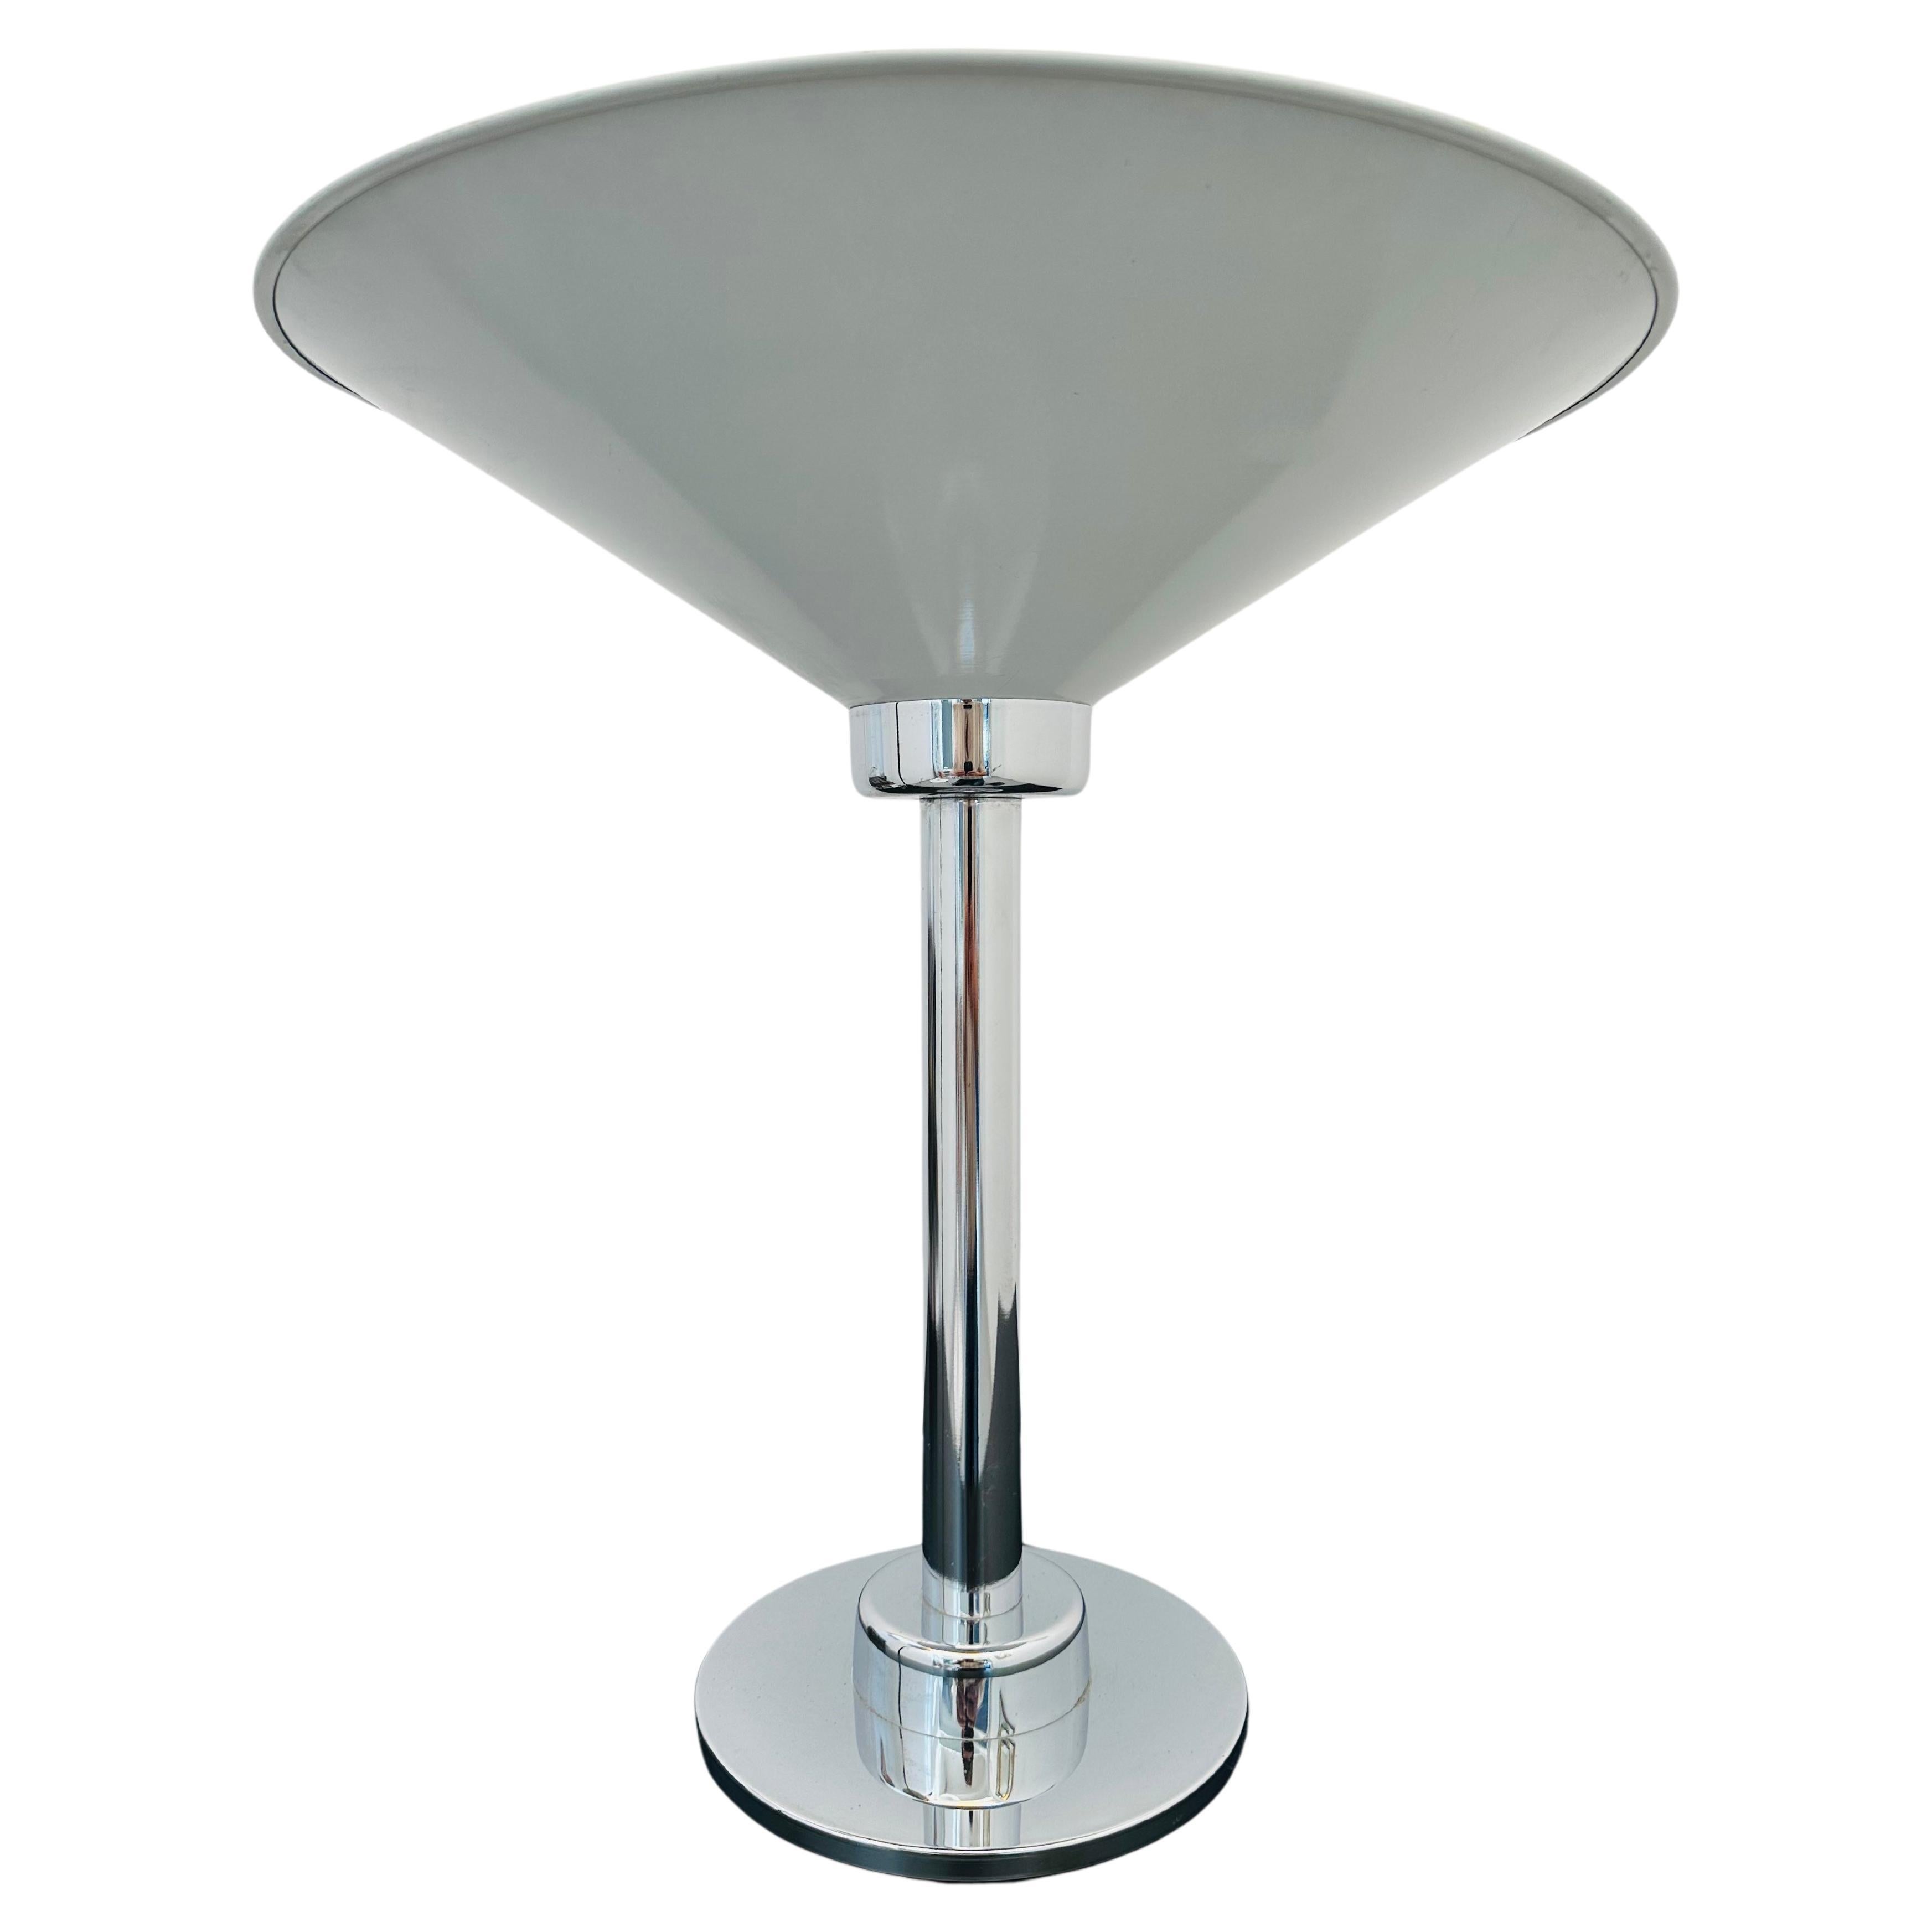 1970s Italian Conical Enamelled White Metal & Chrome Uplighter Table Lamp For Sale